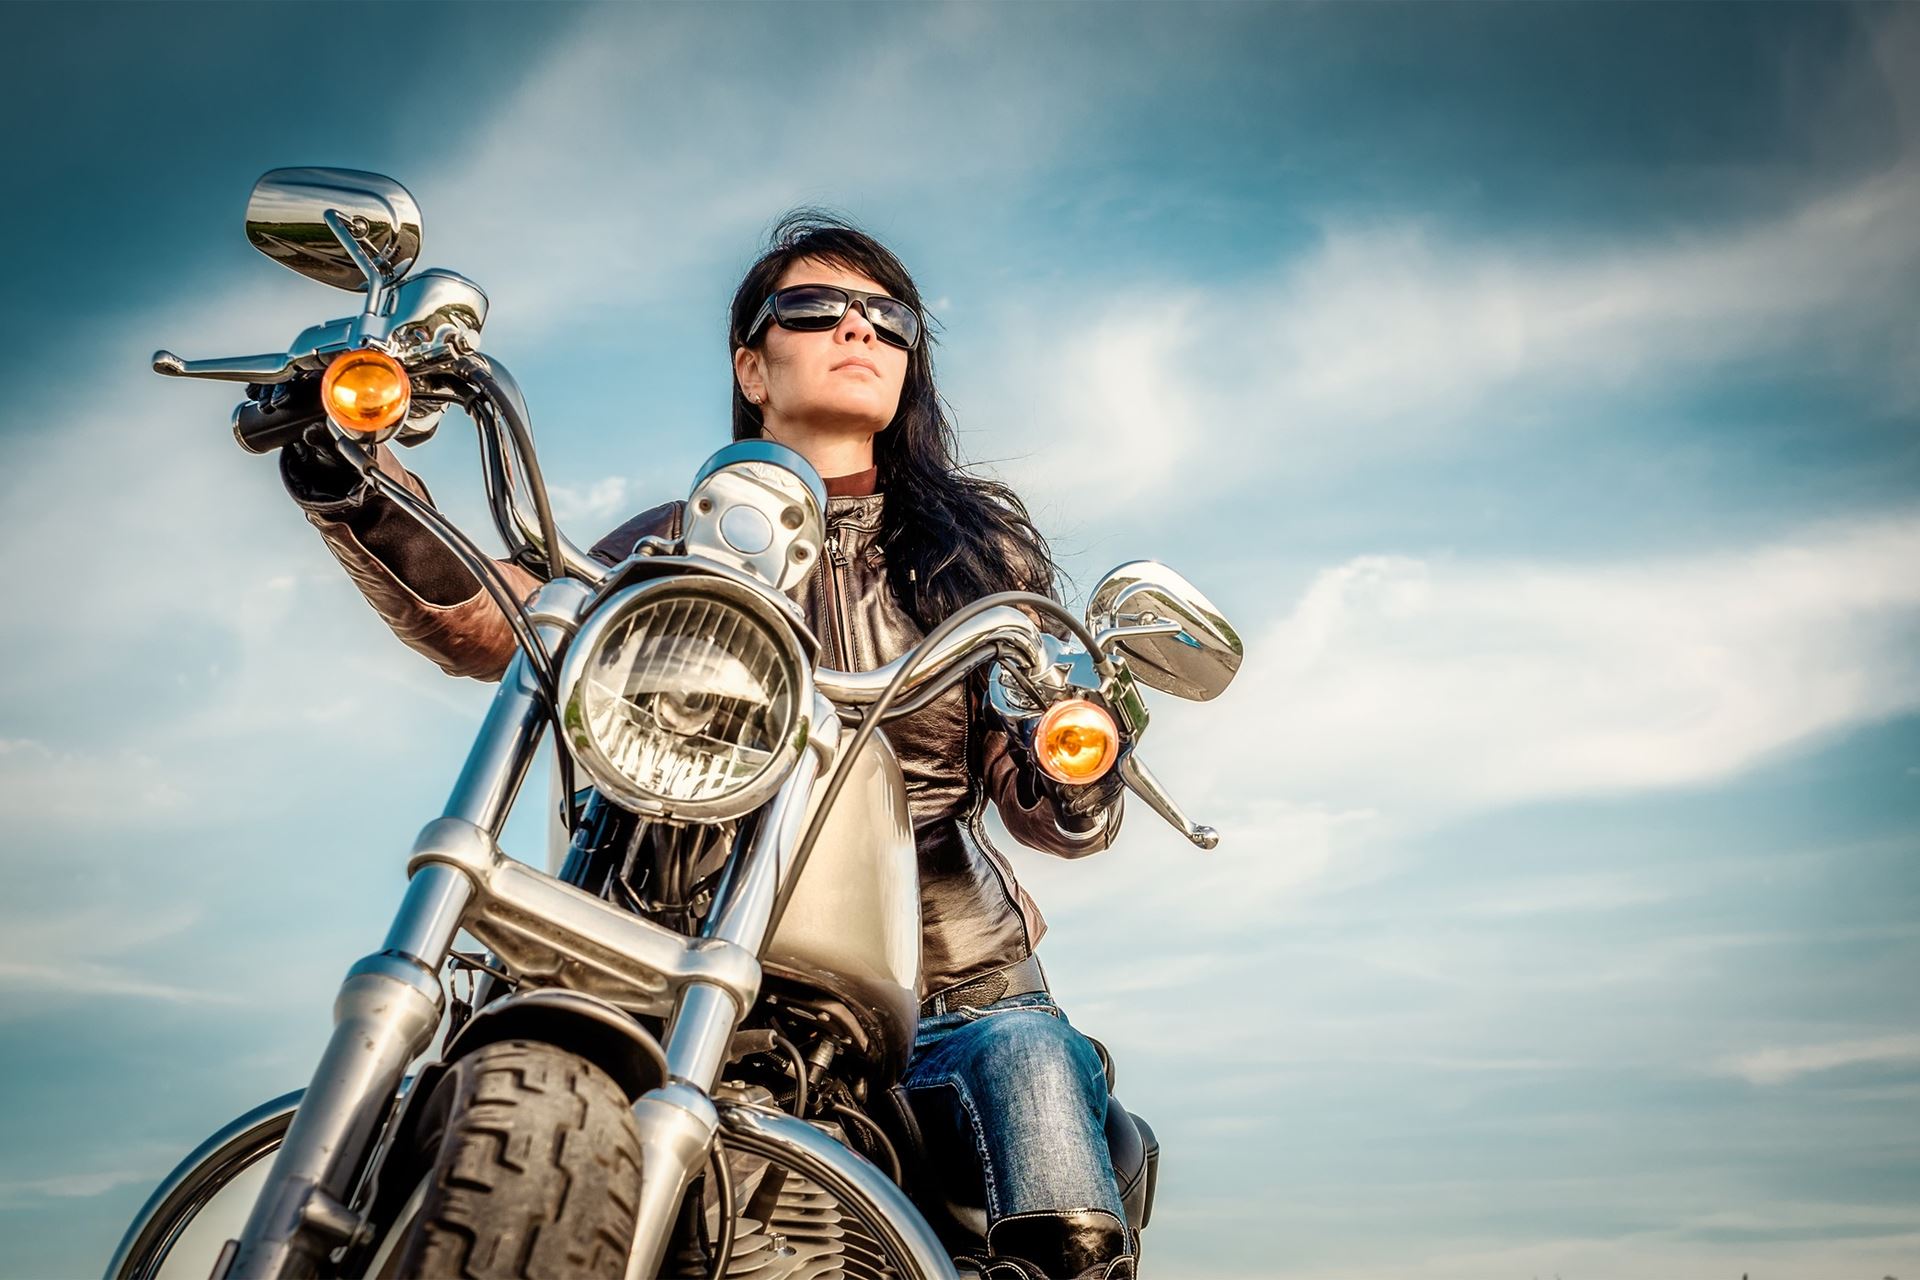 Sábado Celebra Se O International Female Ride Day Motonews Andar De Moto Brasil 8149